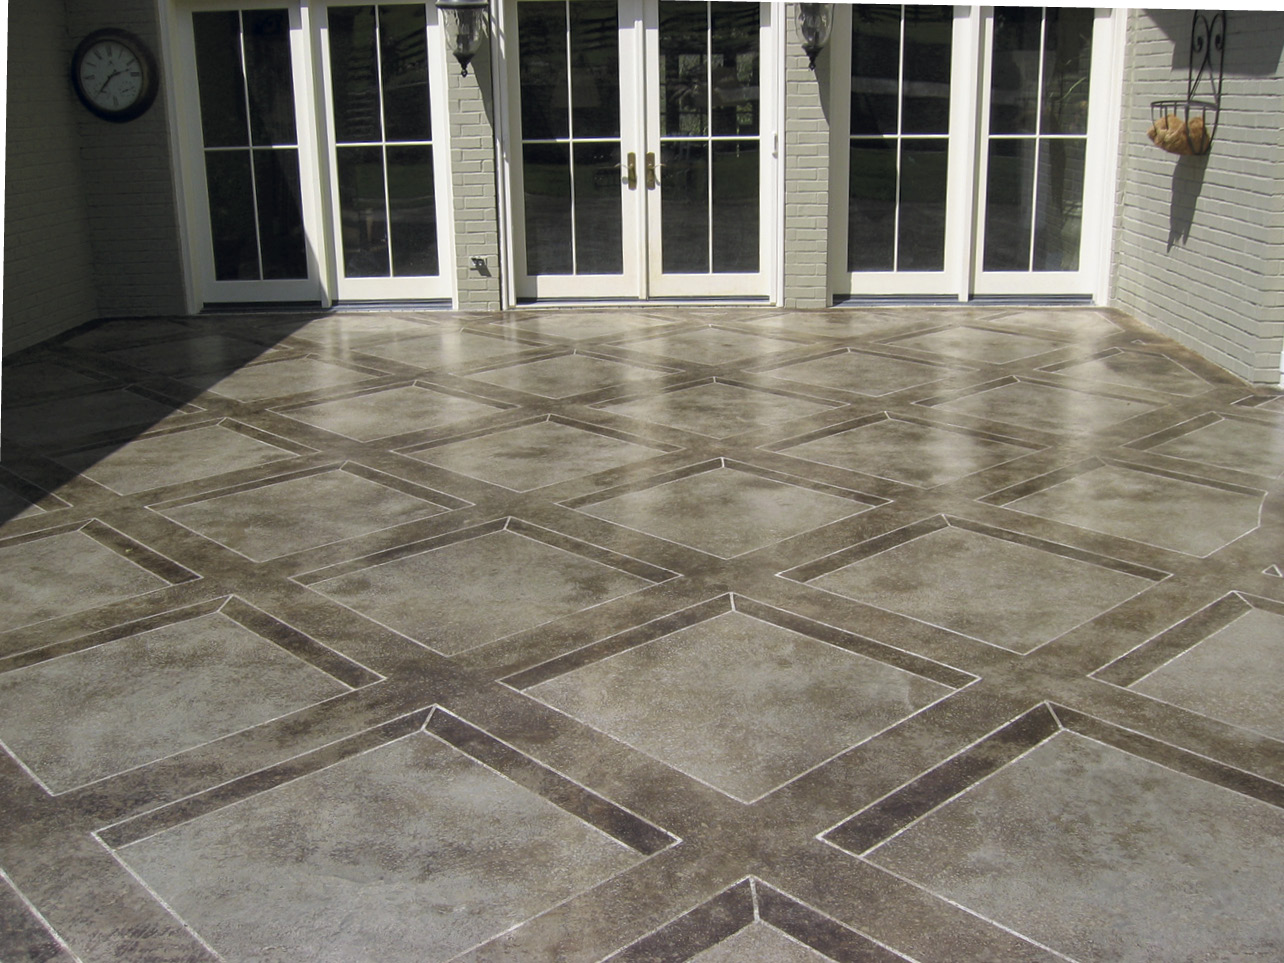 adding a tile pattern to concrete